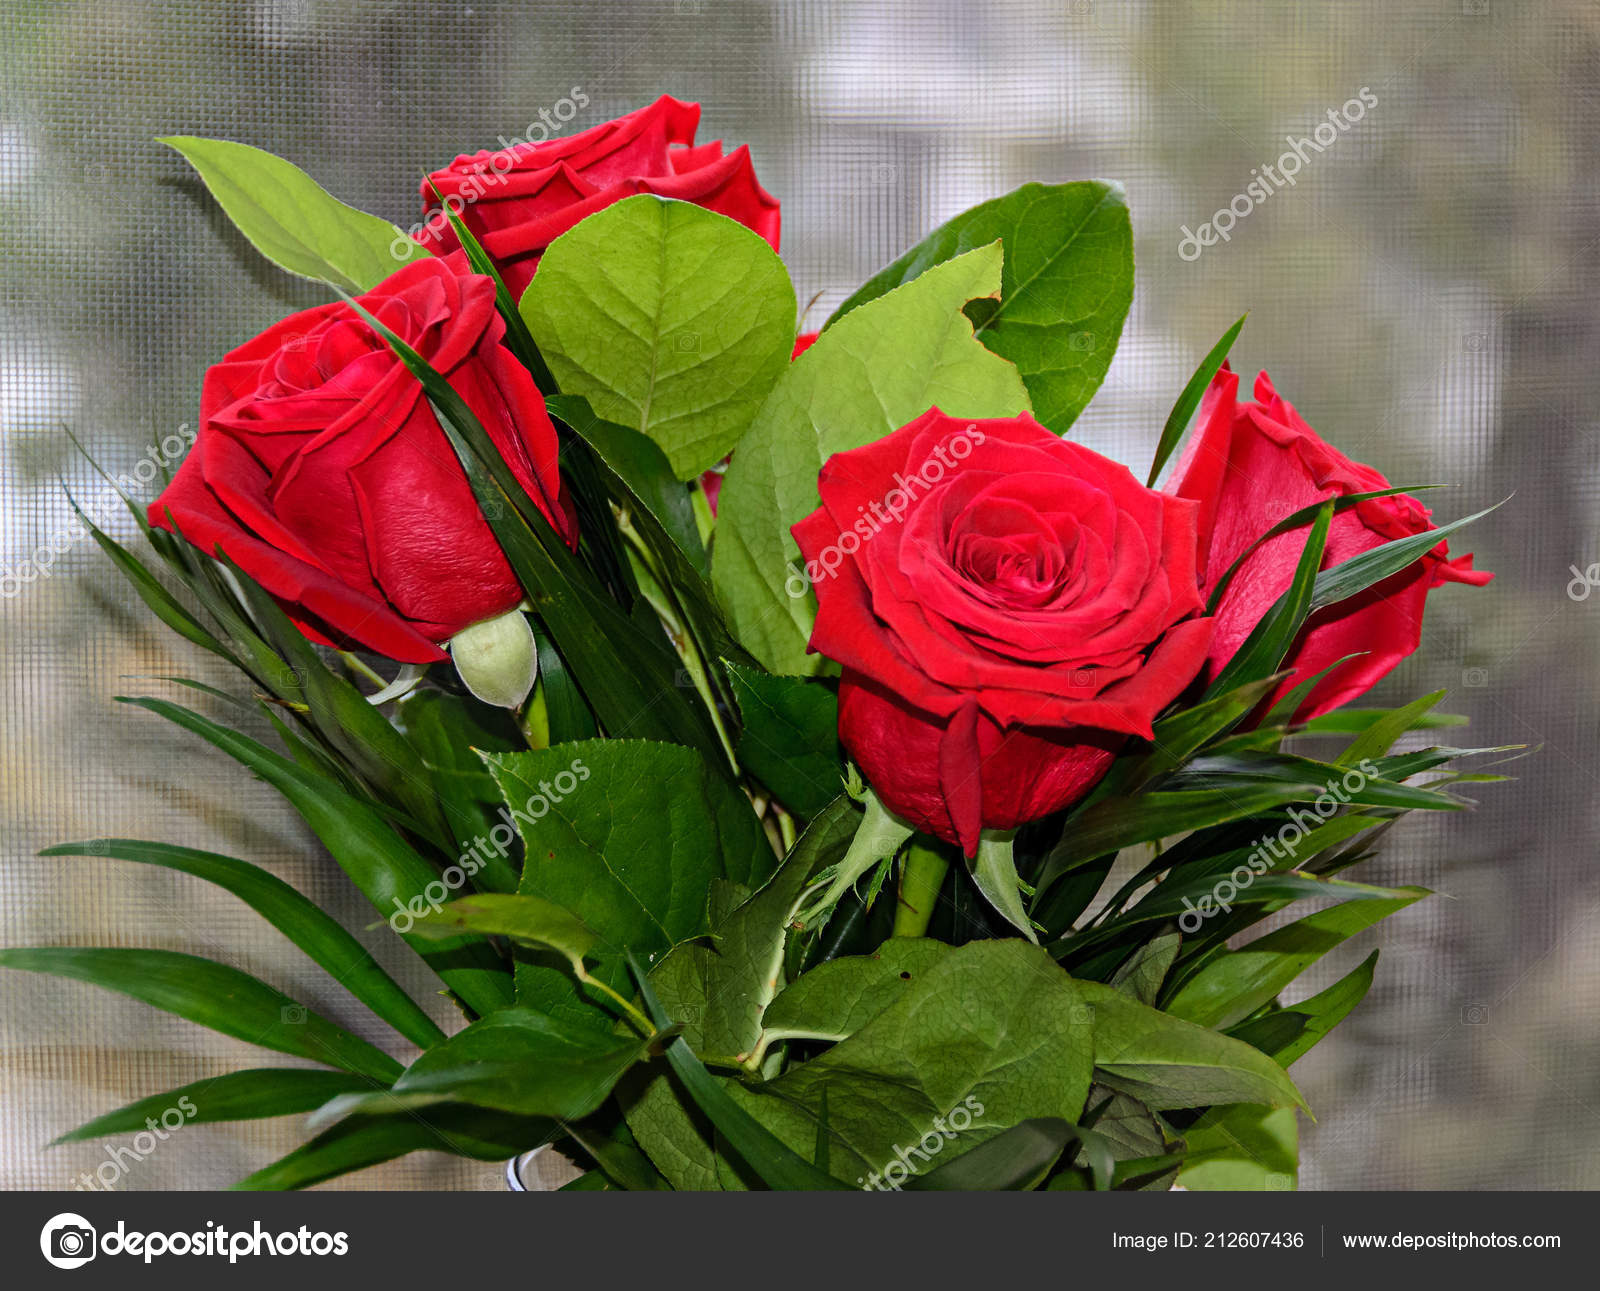 Ramo Flores Rosas Rojas Cerca Cubierta Papel Hojas Verdes: fotografía de  stock © ncristian #212607436 | Depositphotos